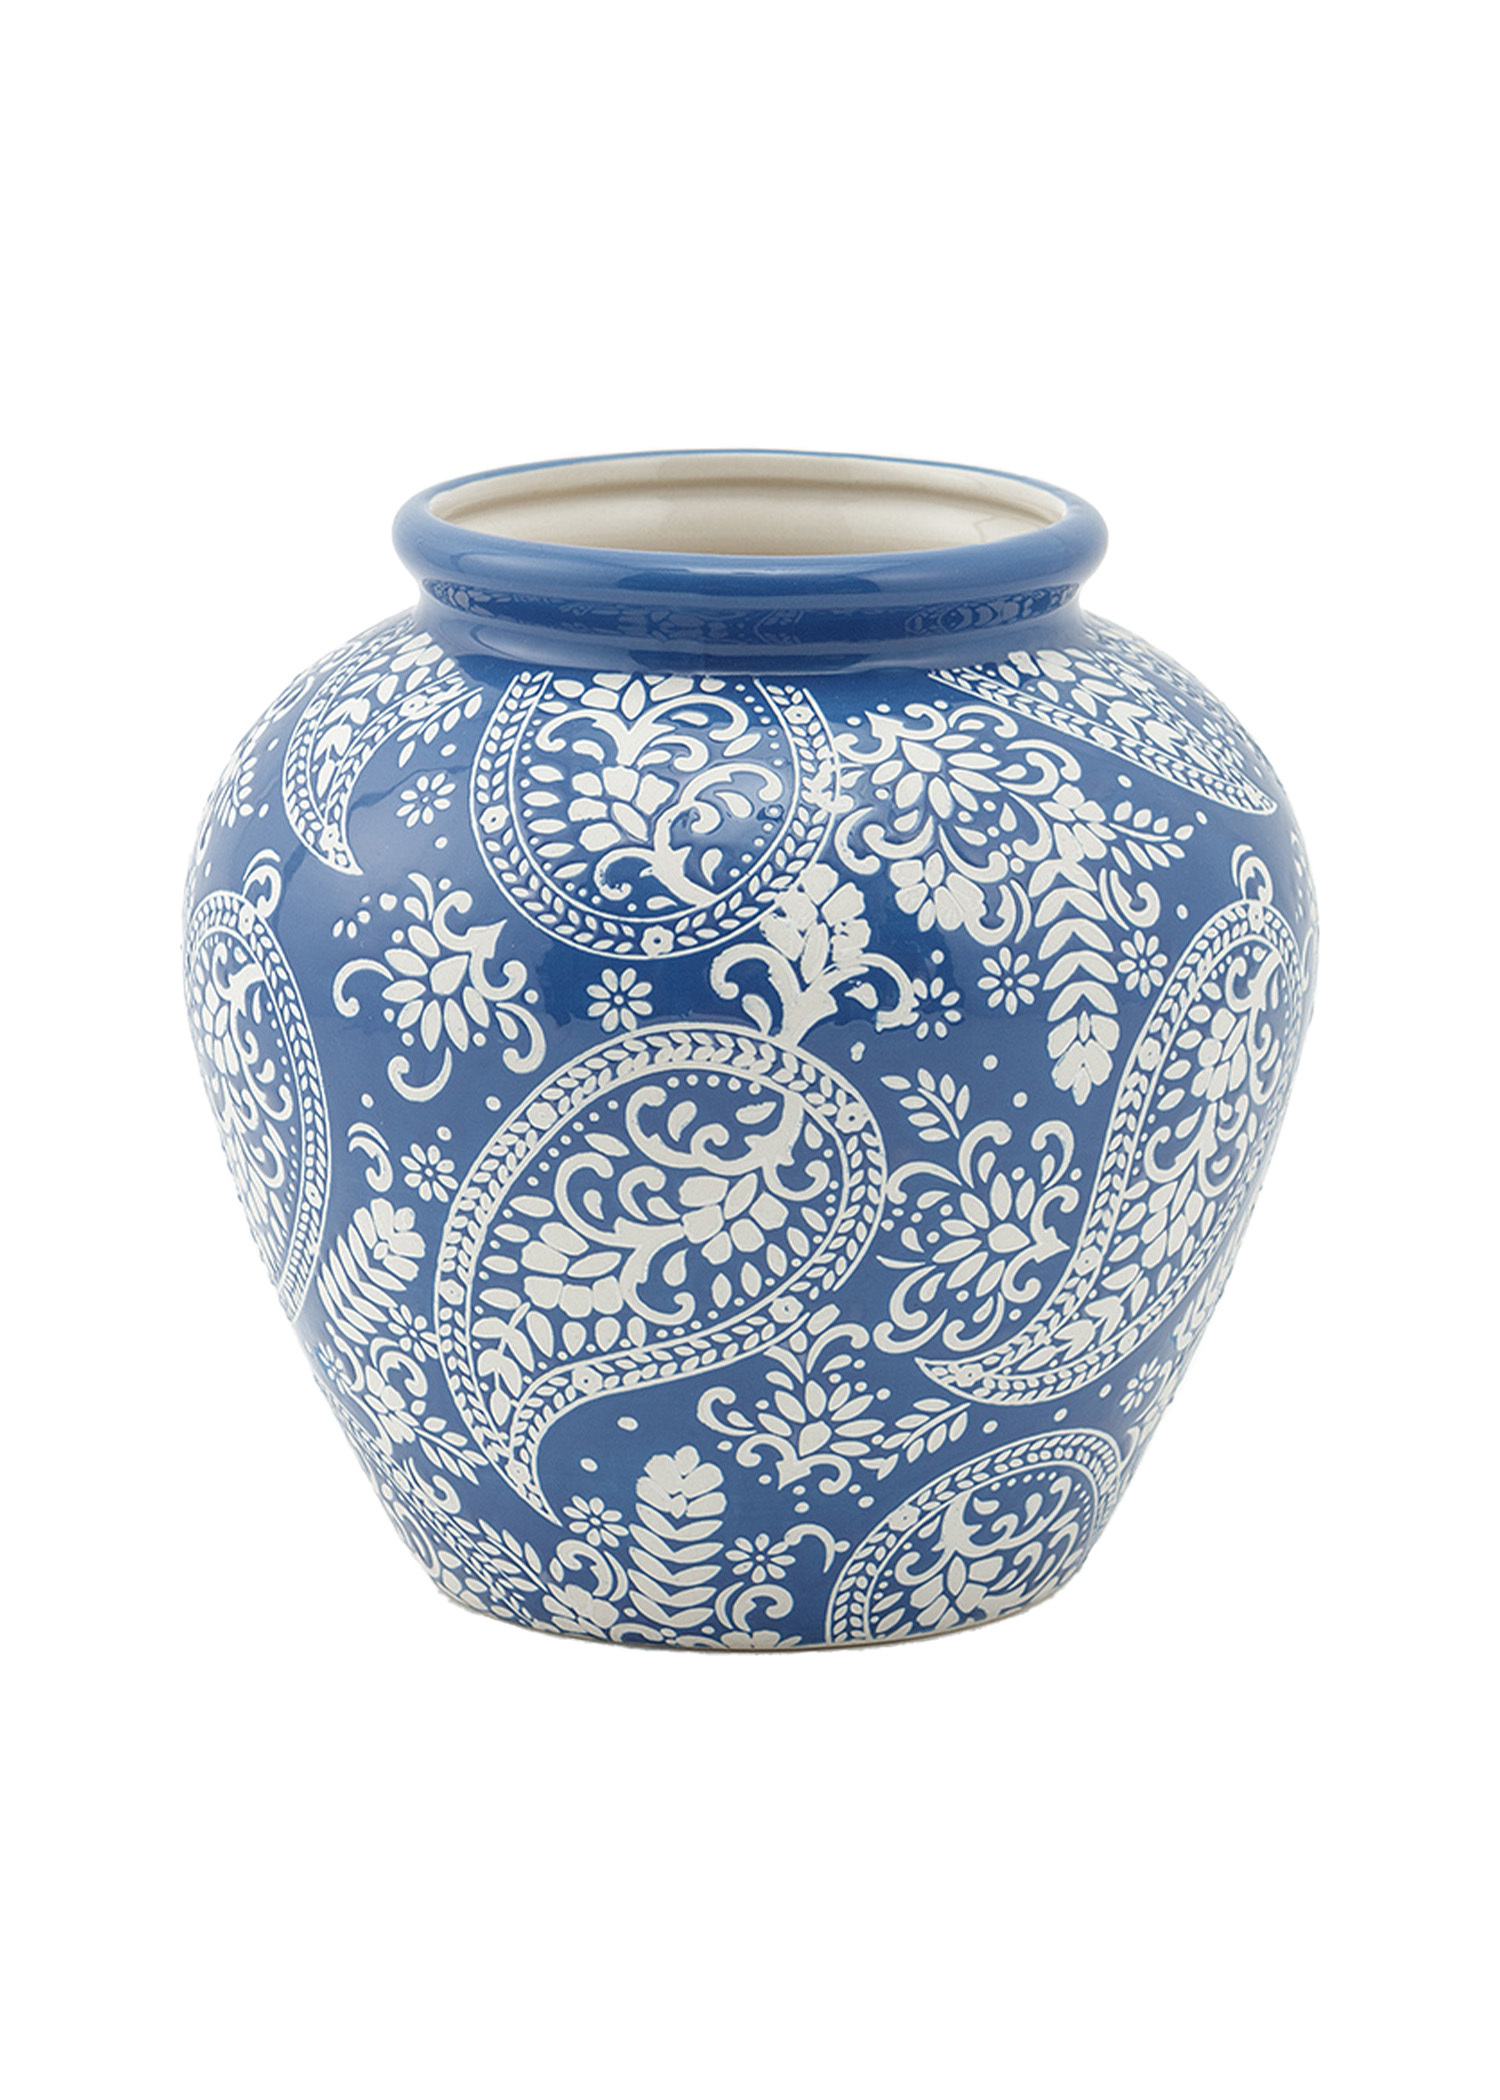 Blue paisley patterned vase